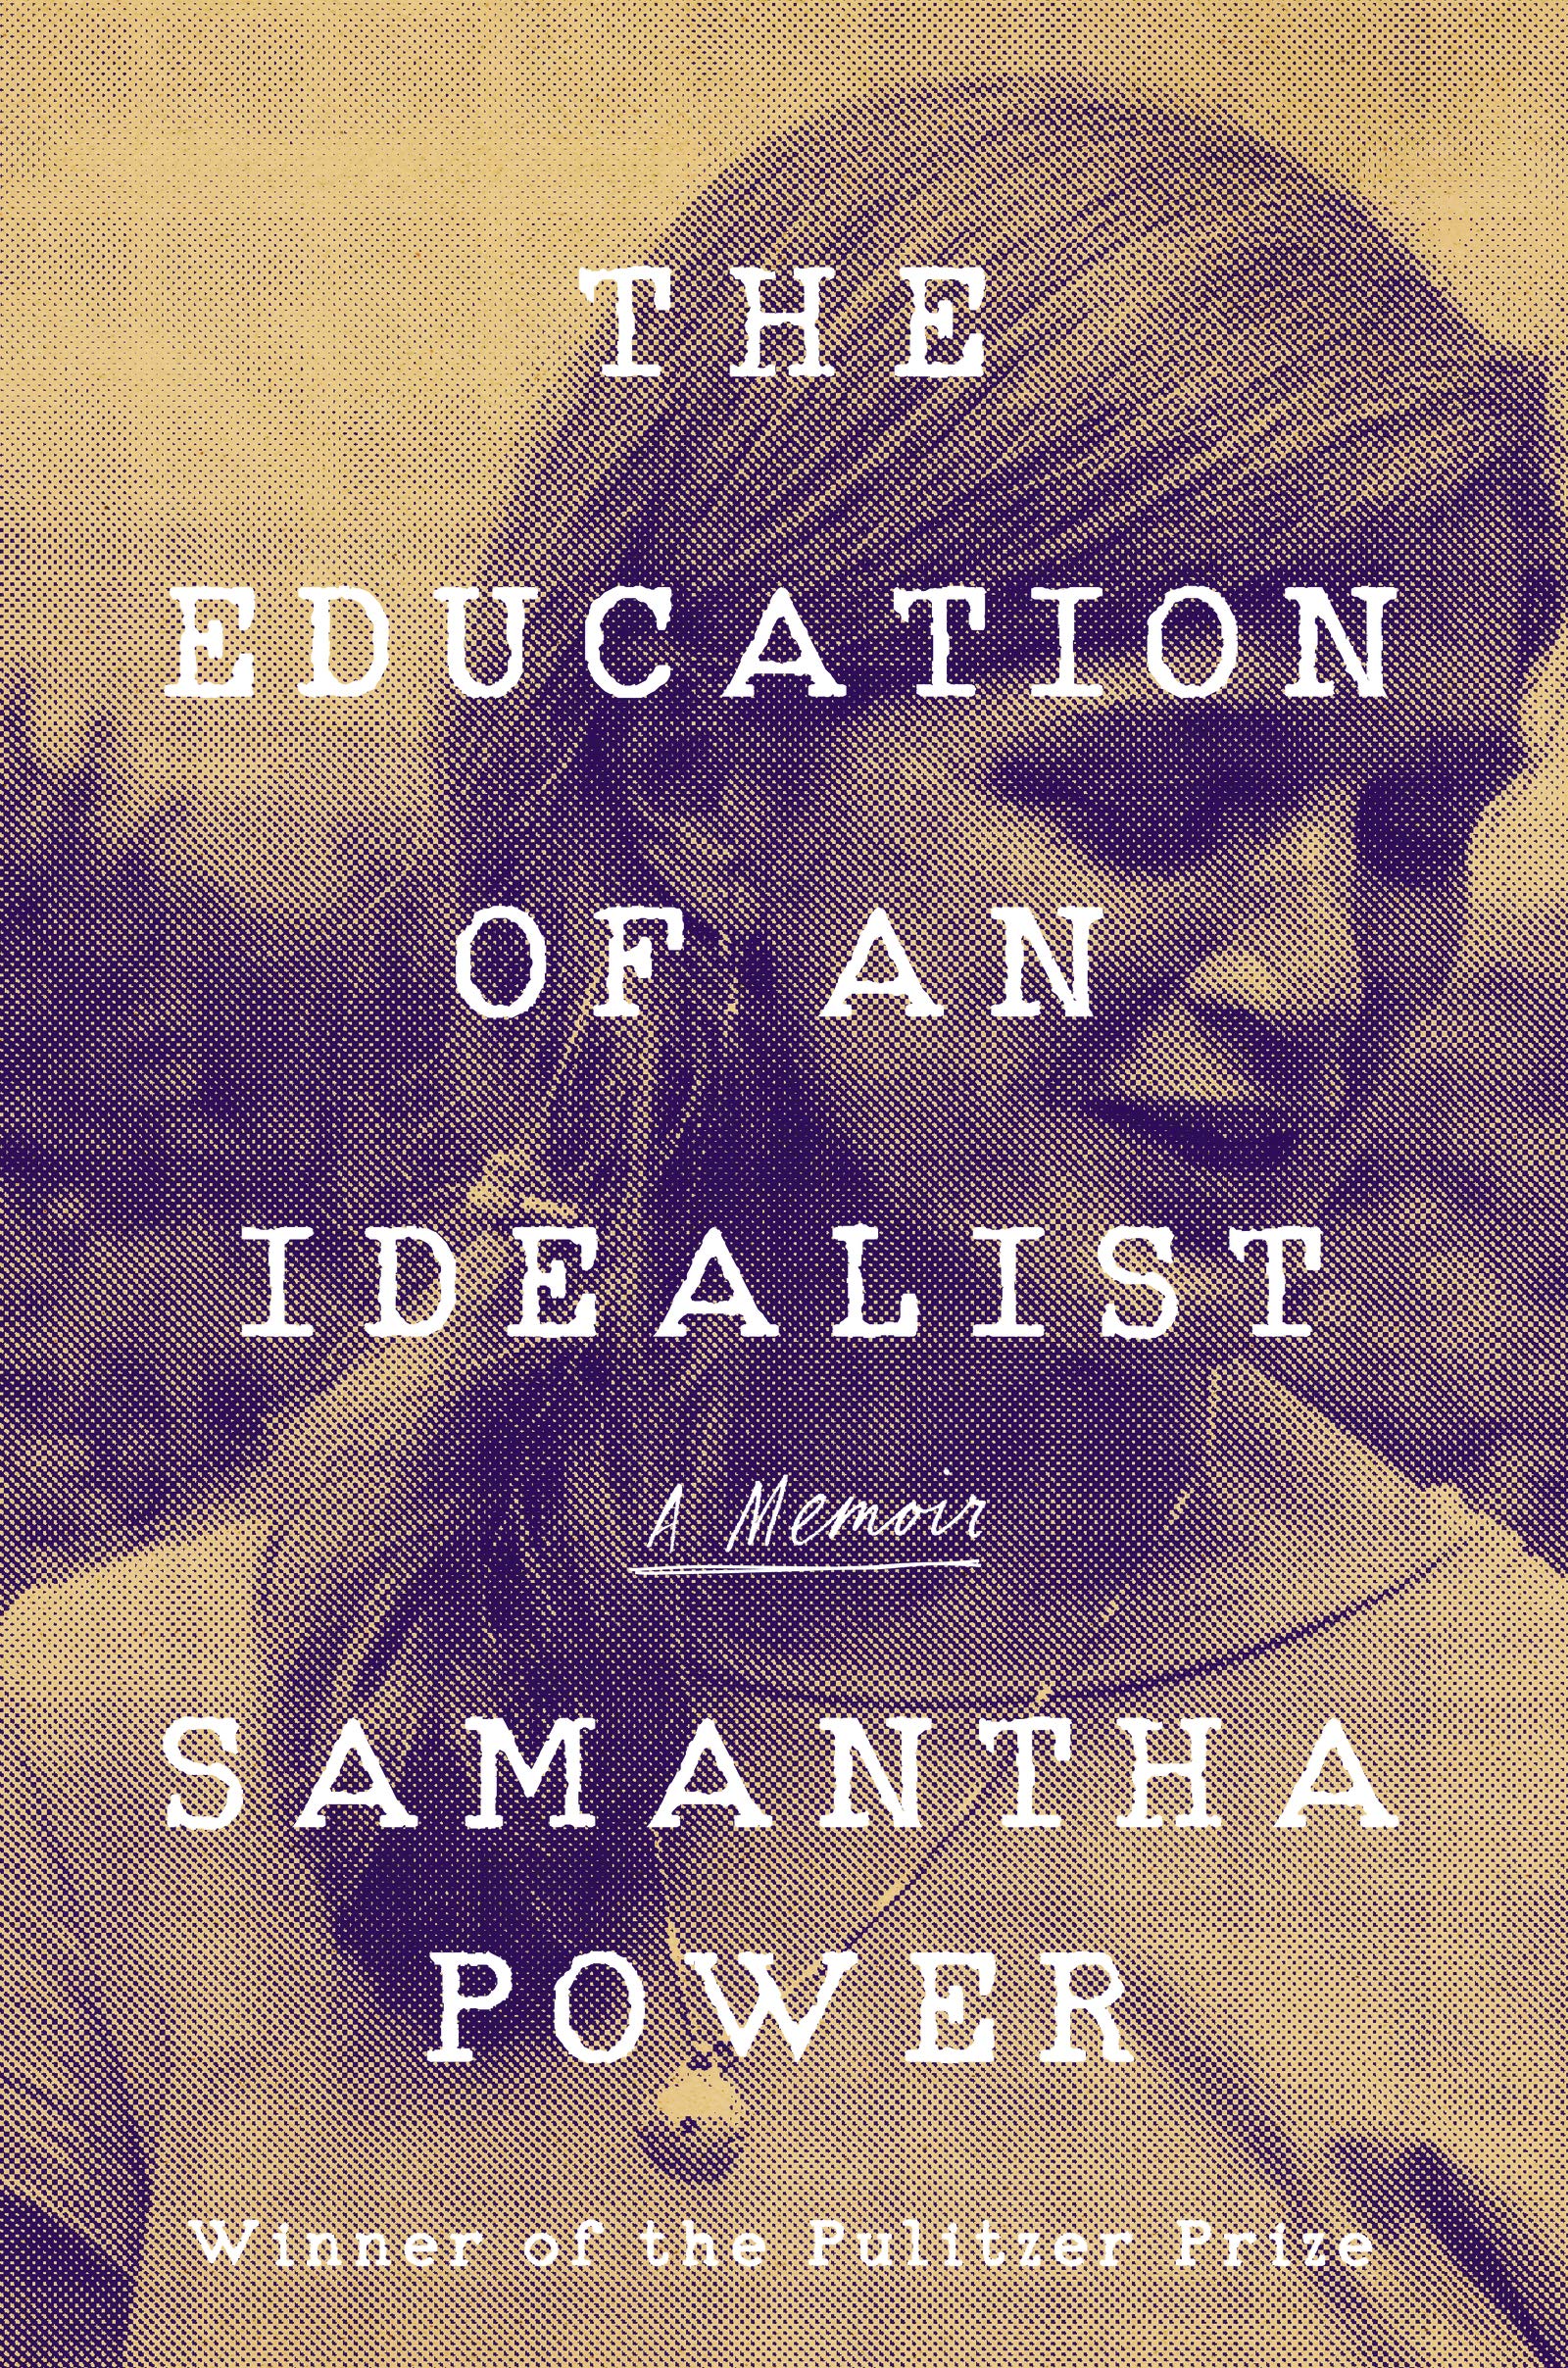 Education of an idealist